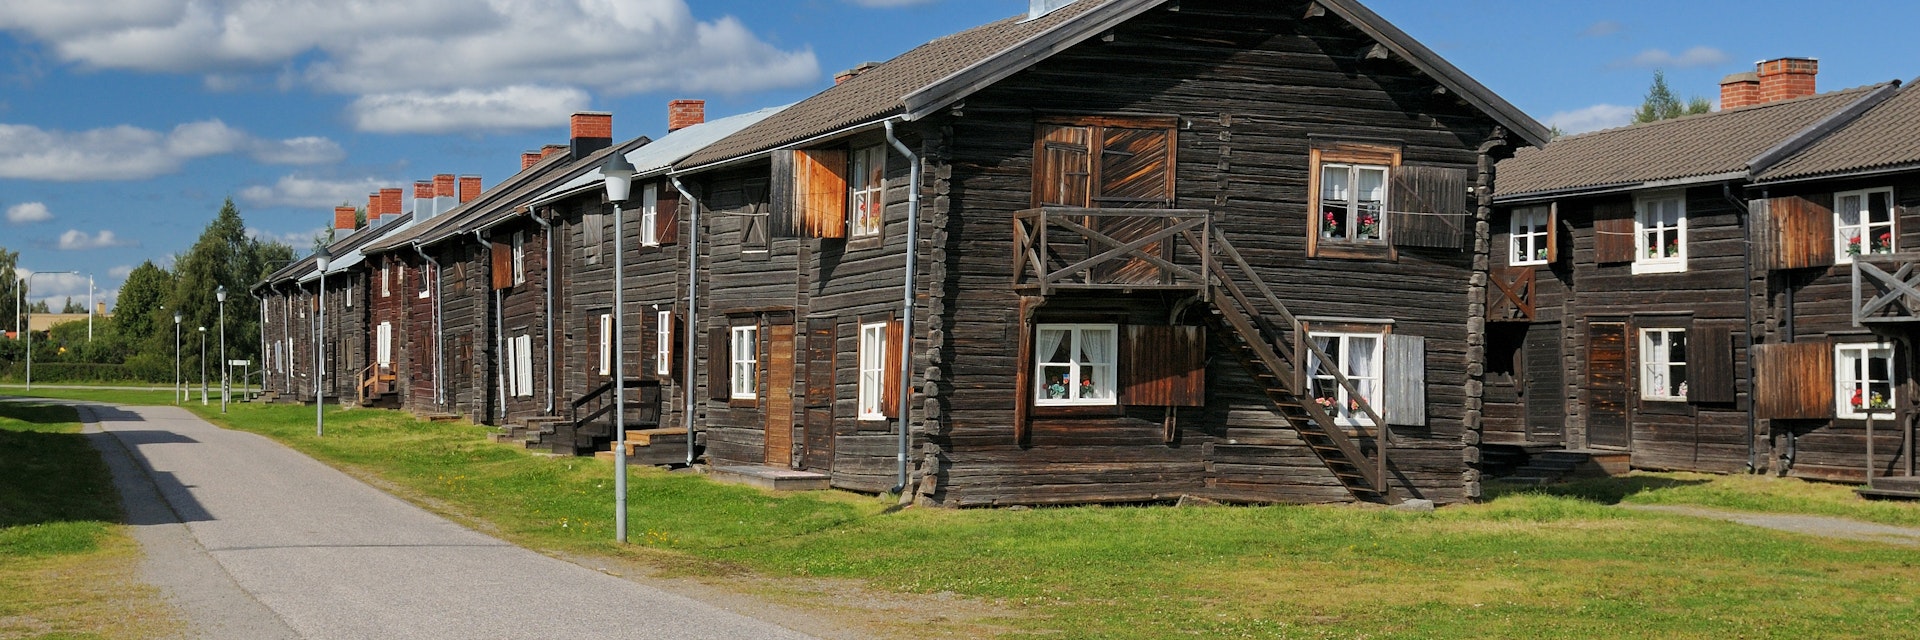 Wooden houses of the church town Bonnstan.
